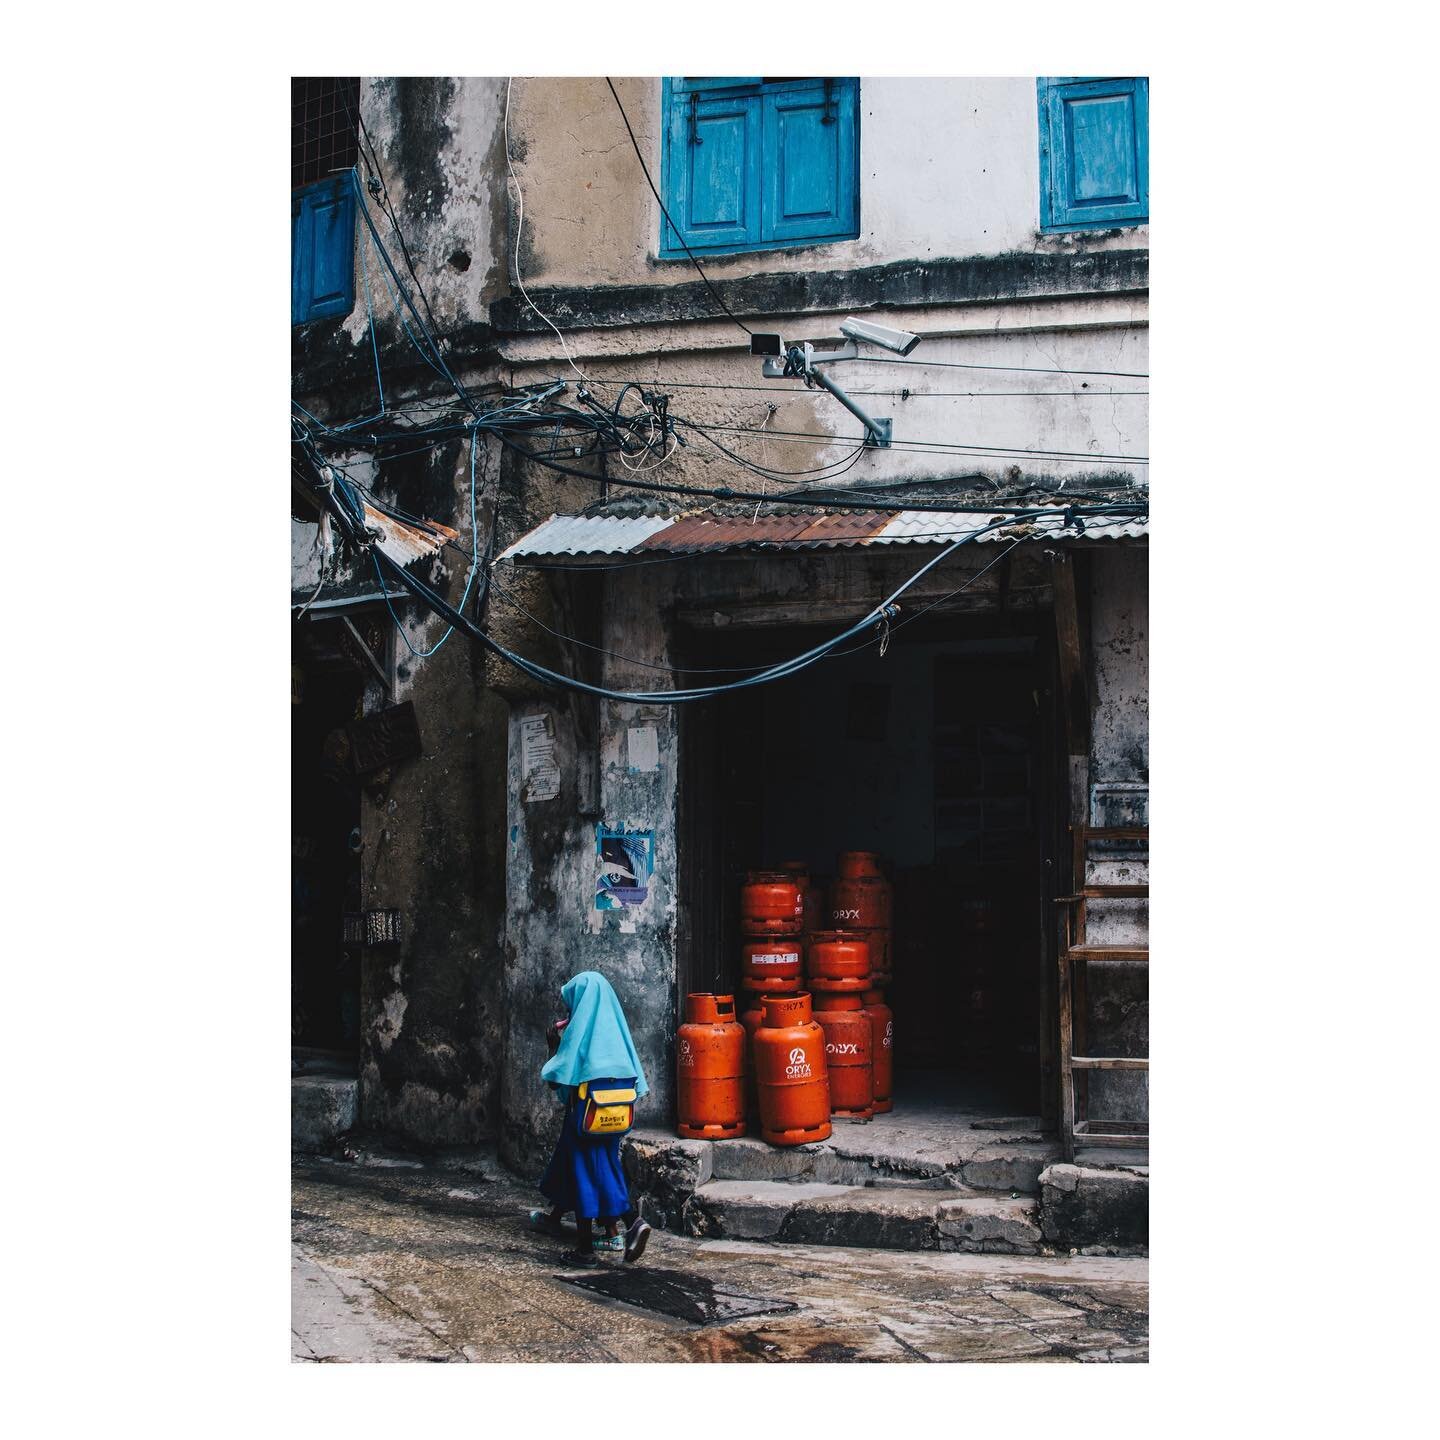 A young girl walks home from school  through the alleyways of Stone Town, Zanzibar. 

#dsdocumentary #zanzibar 
.

.
.
.
.
.
.
#stonetown #nikon #nikonphotography #nikonnz #nikond750 #nzdphoto #nzdphoto_magazine #progearfeature #photographer #photojo